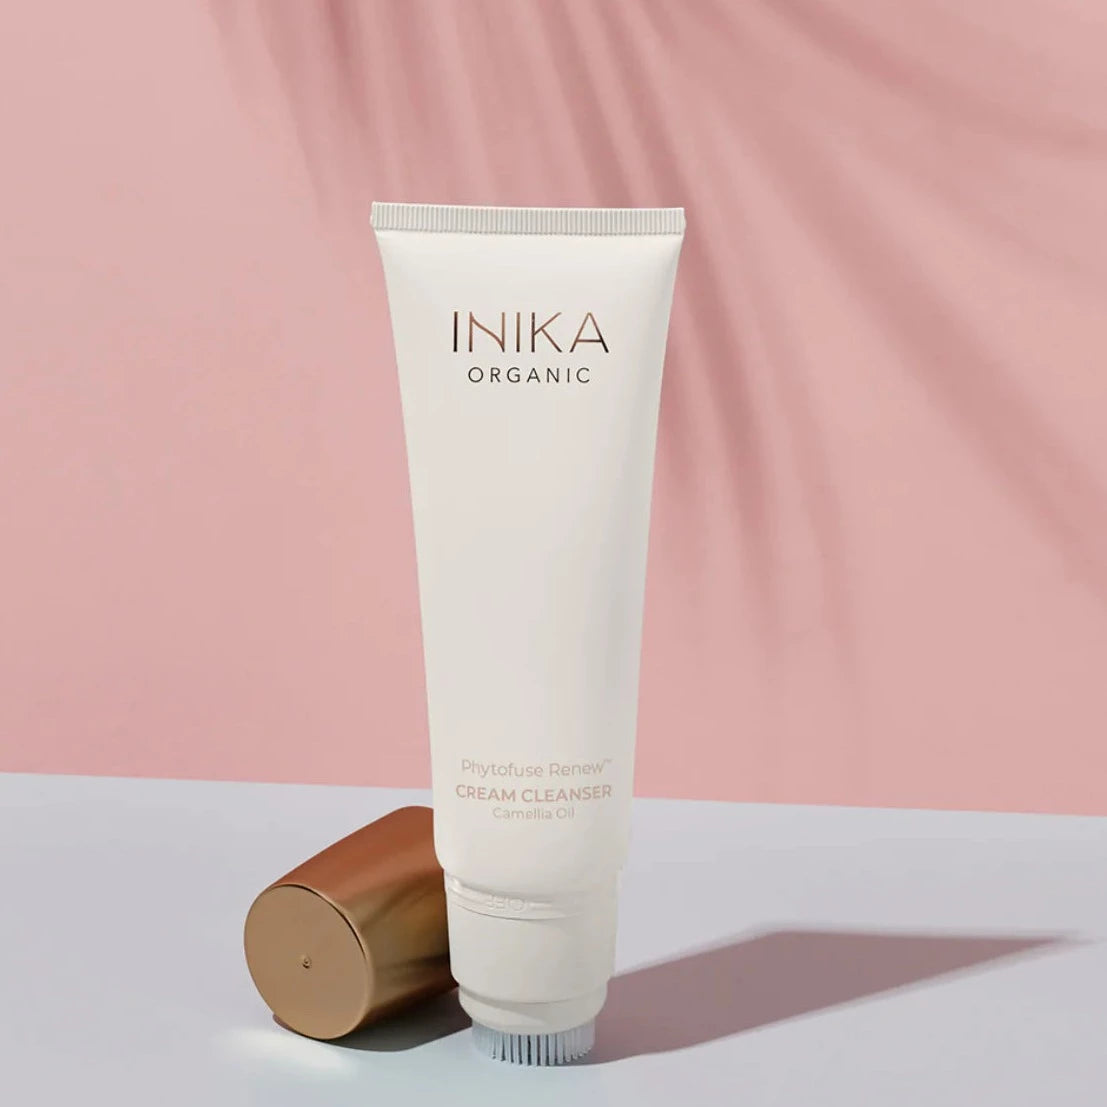 INIKA Organic Phytofuse Renew Cream Cleanser | Marga Jacobs